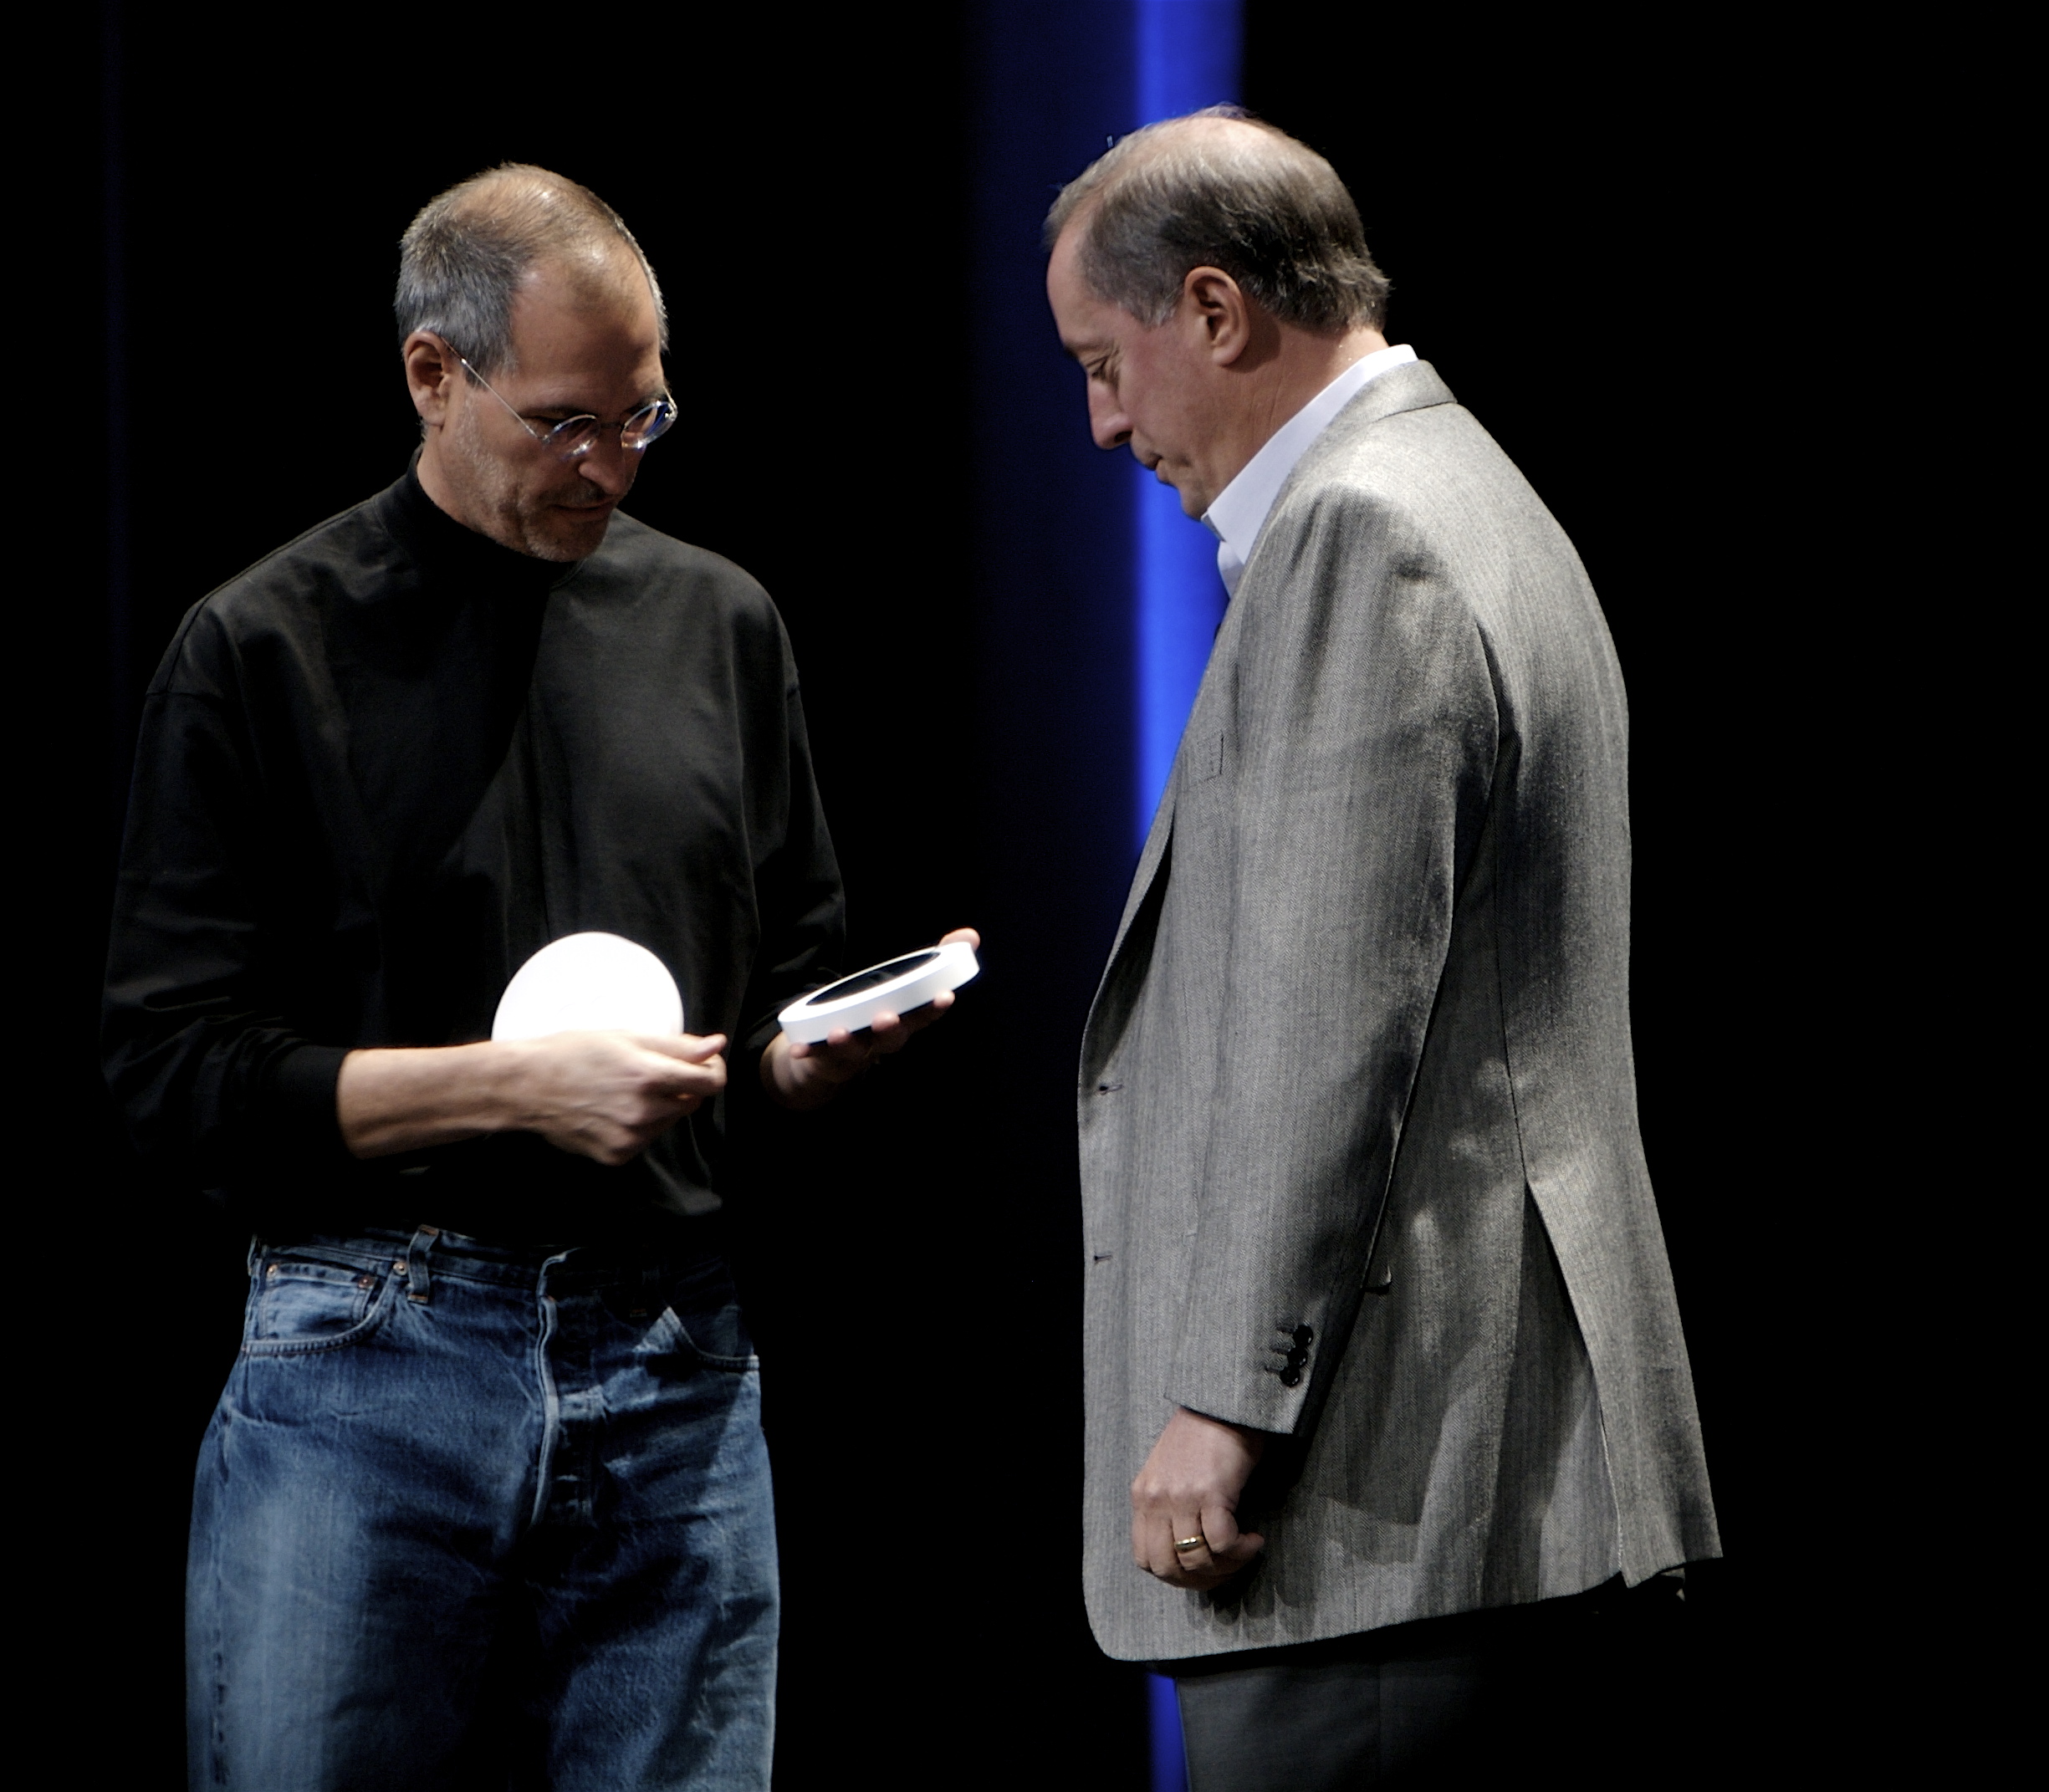 Steve Jobs photo #84728, Steve Jobs image